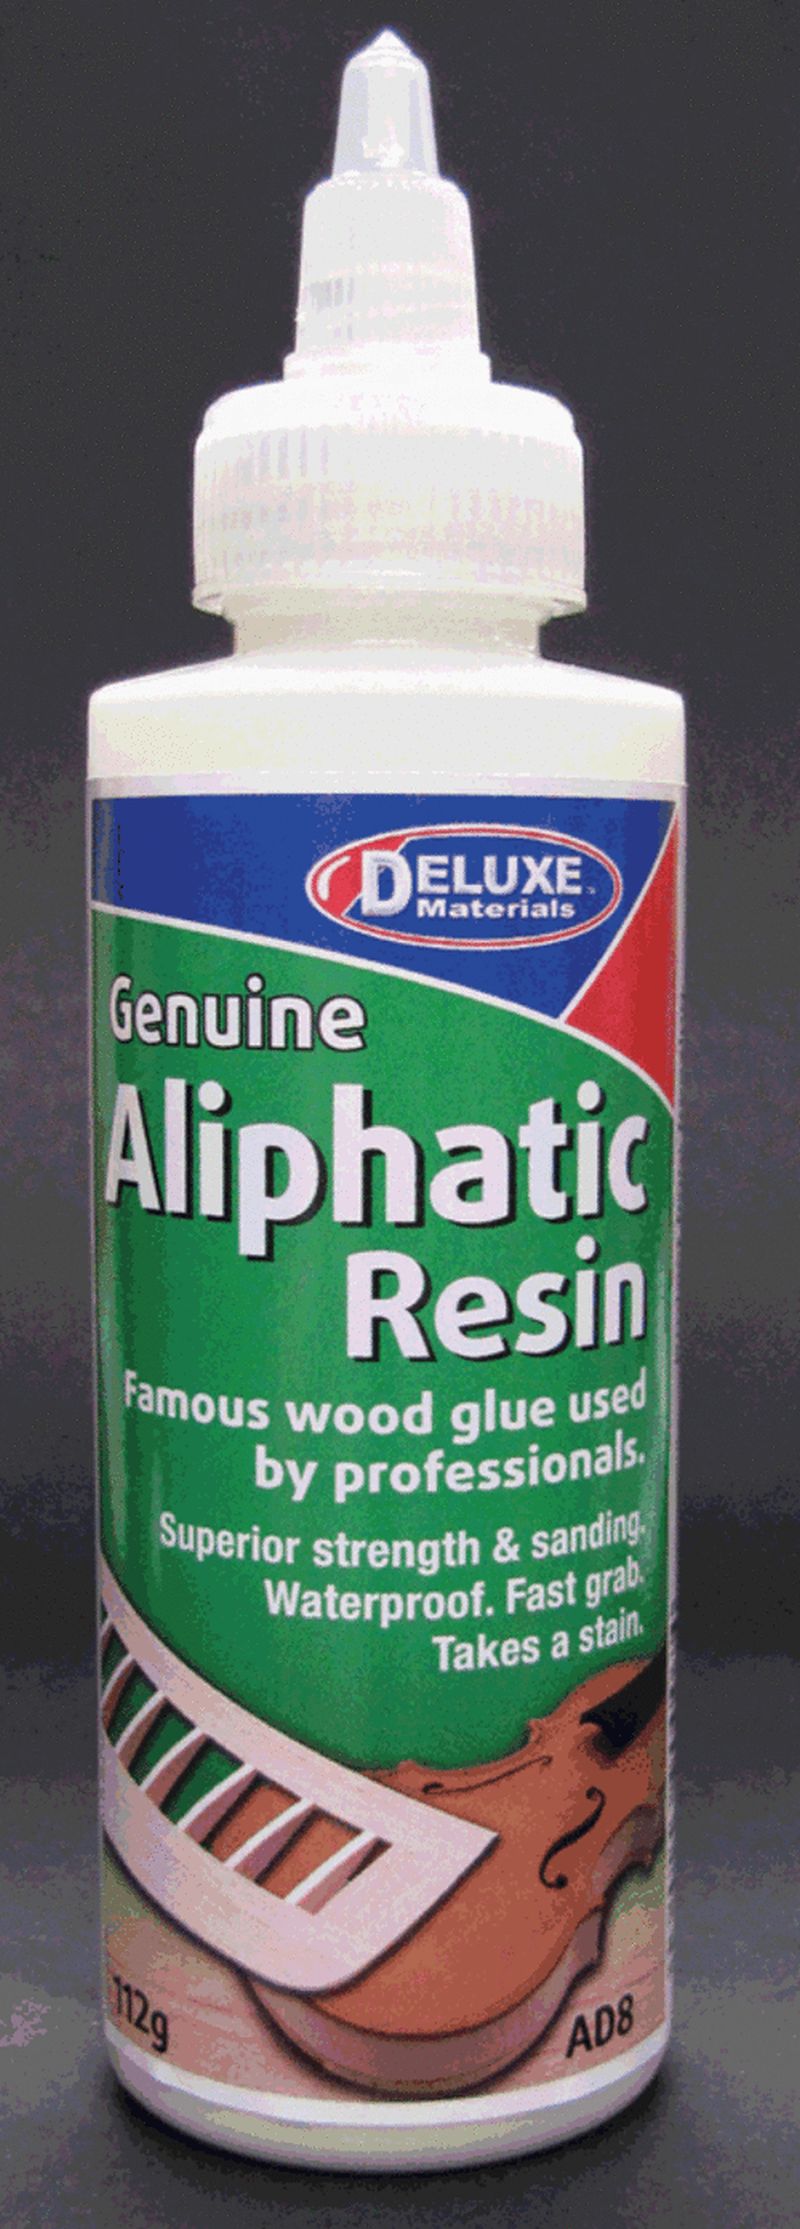 Aliphatic Resin by Deluxe Materials (112 Grams)